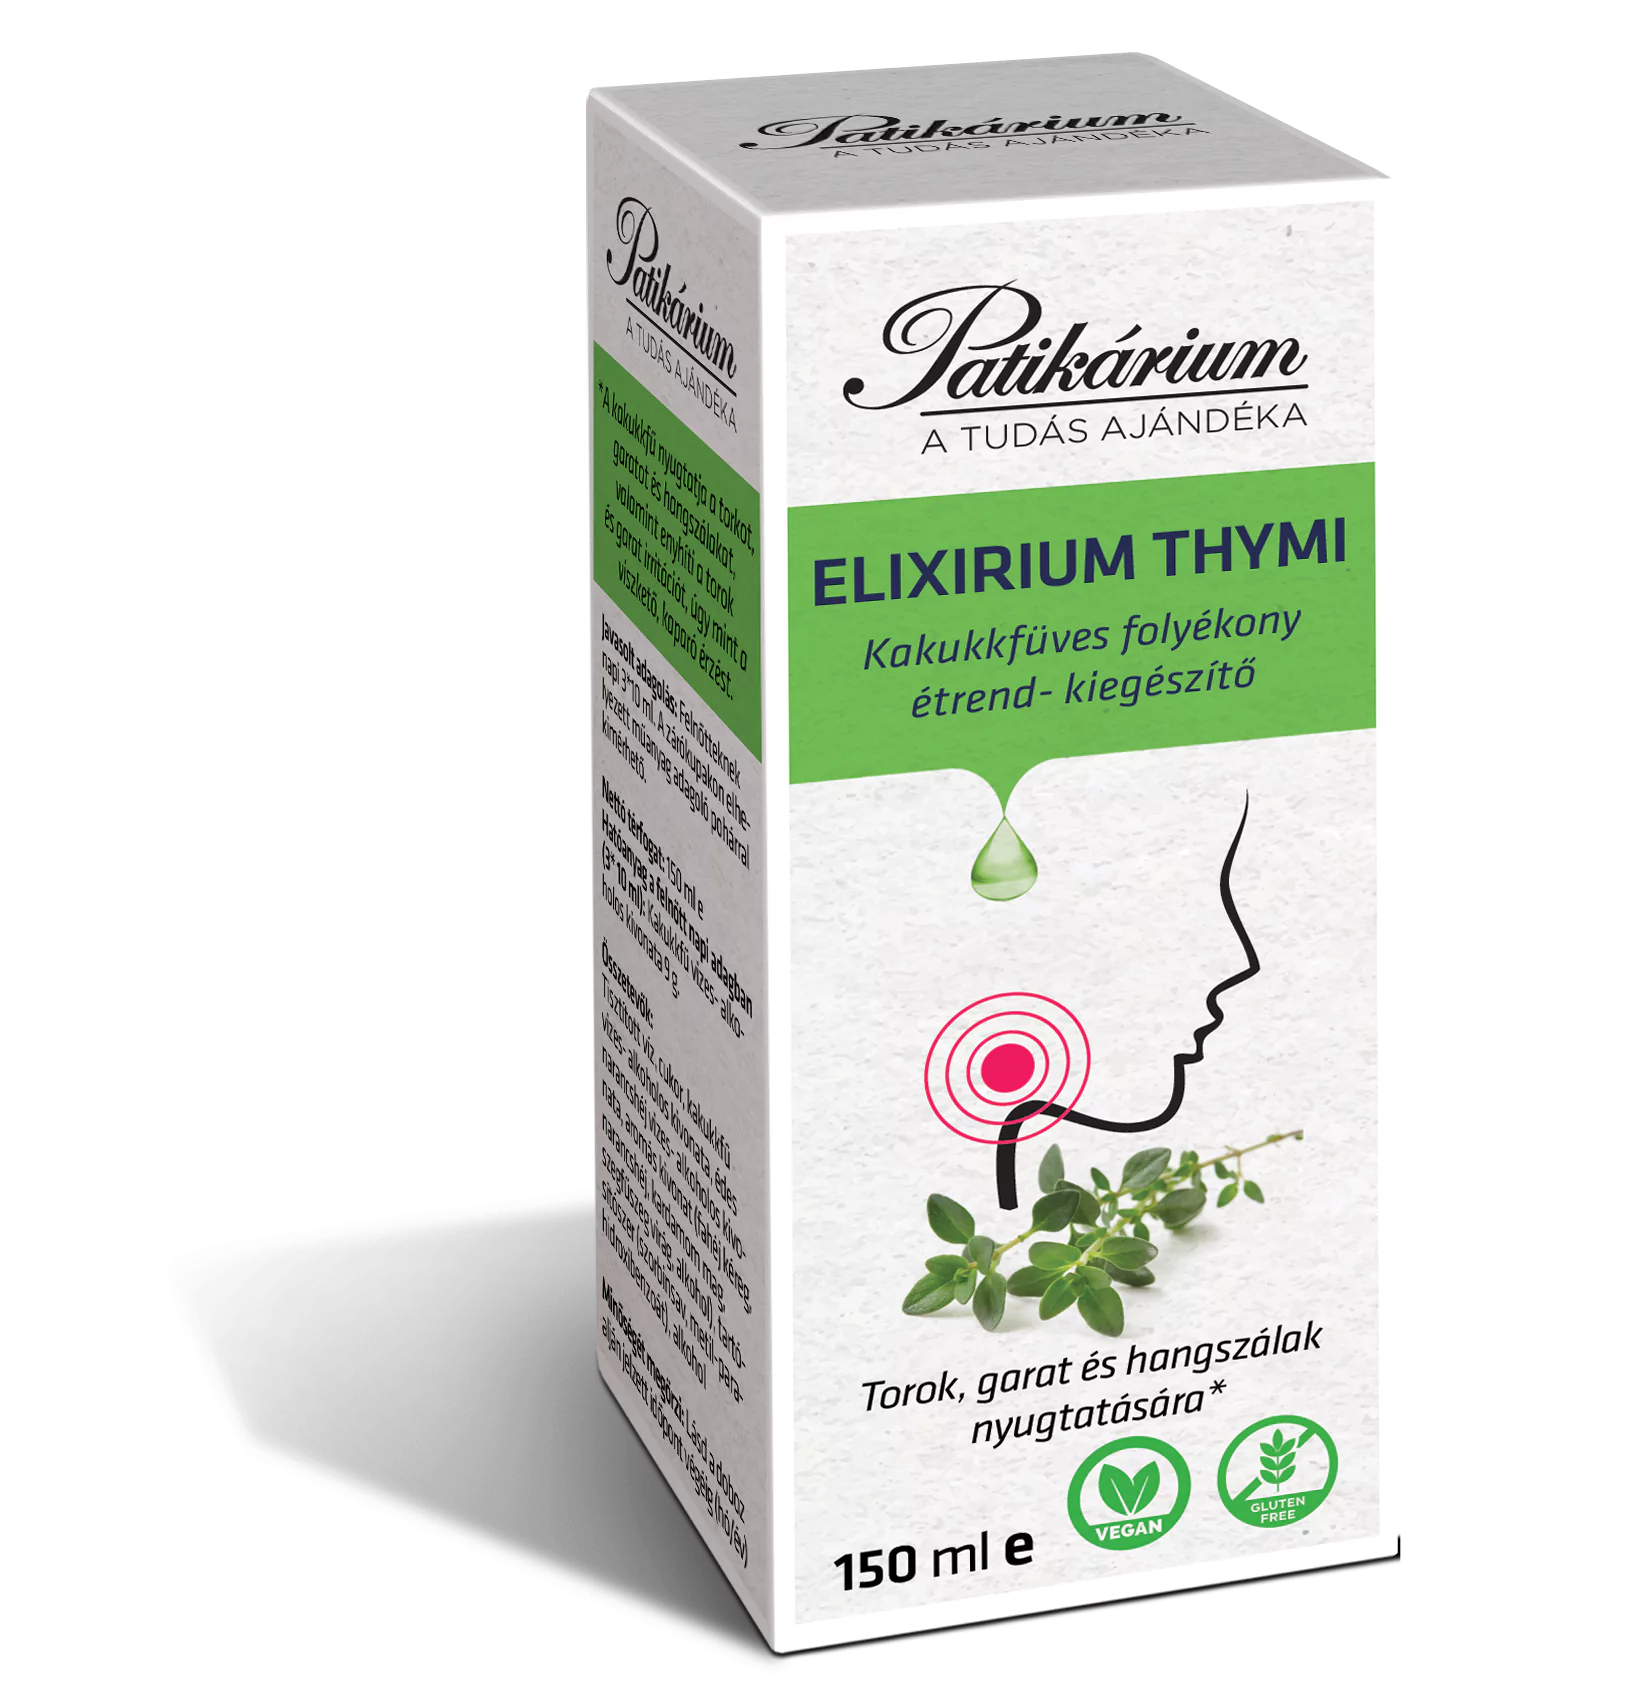 Elixirium thymi